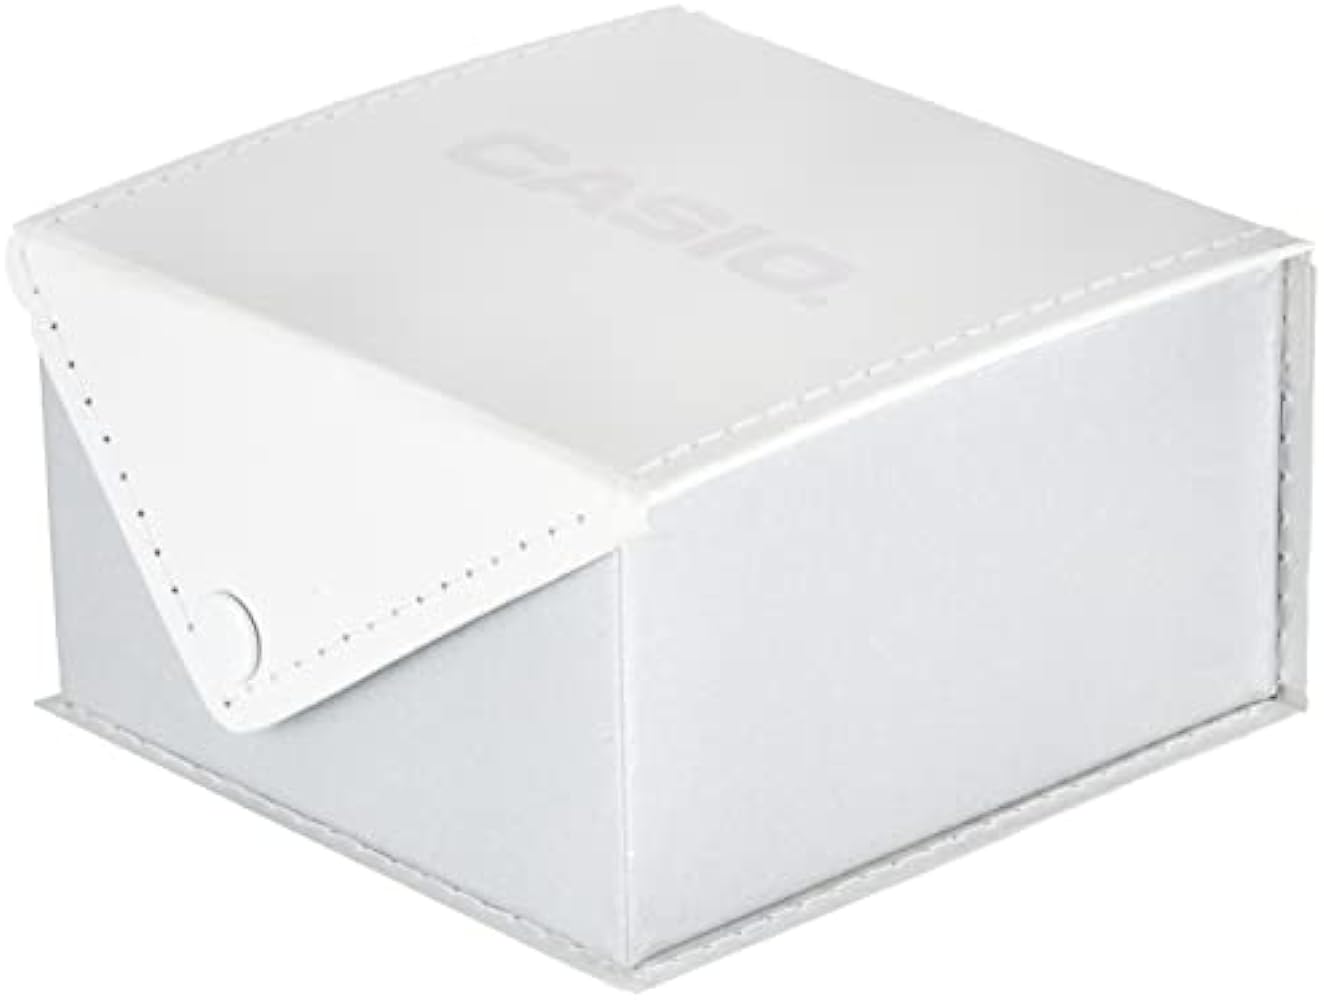 Casio LTP-V004D-1B2UDF